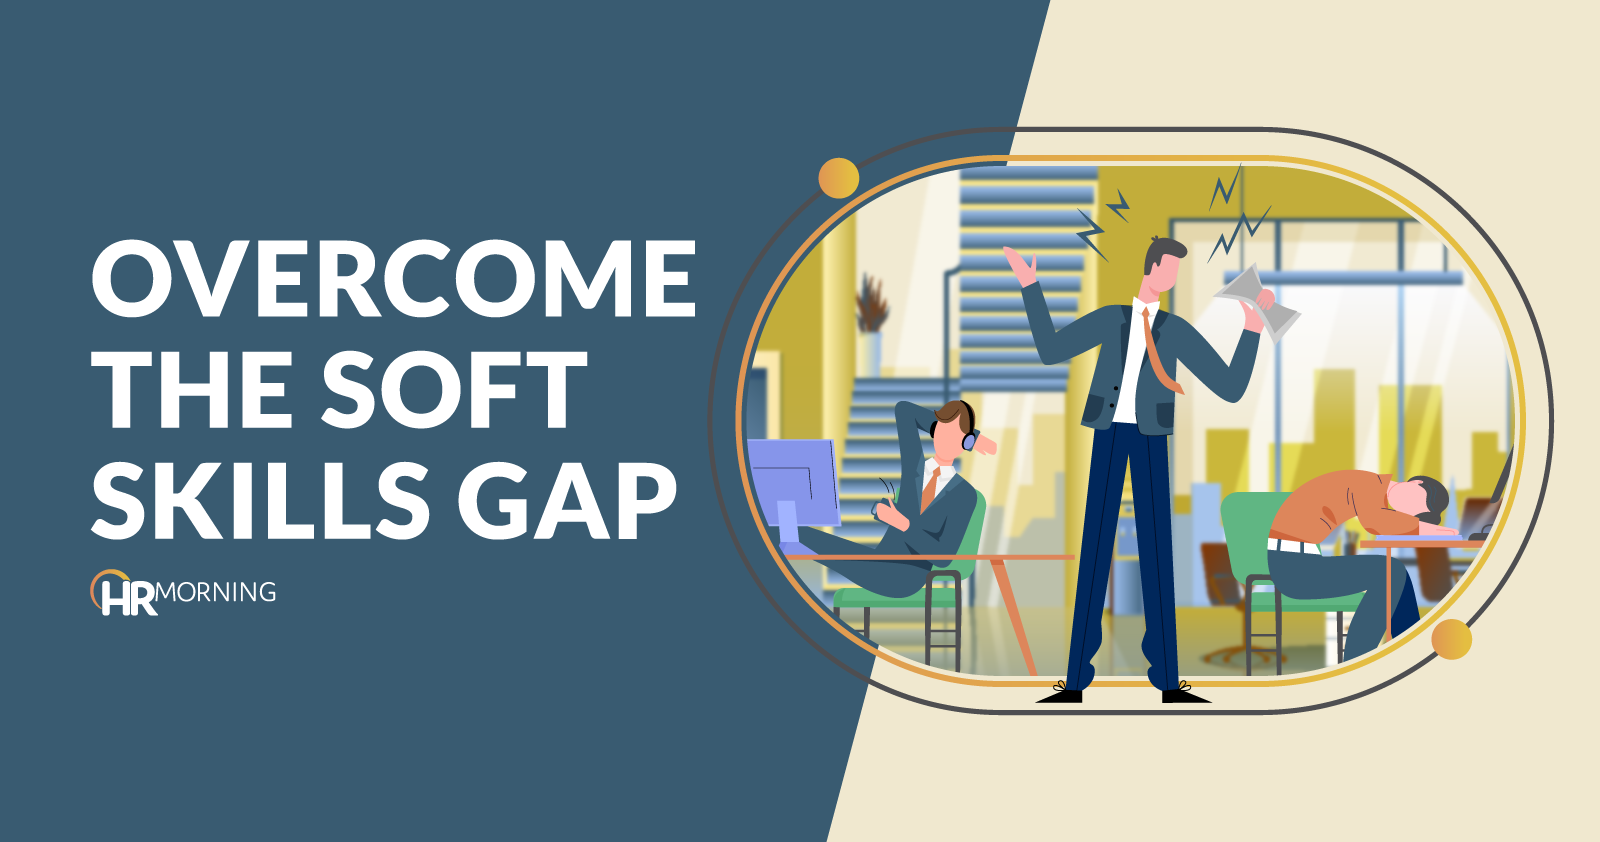 Overcome the soft skills gap